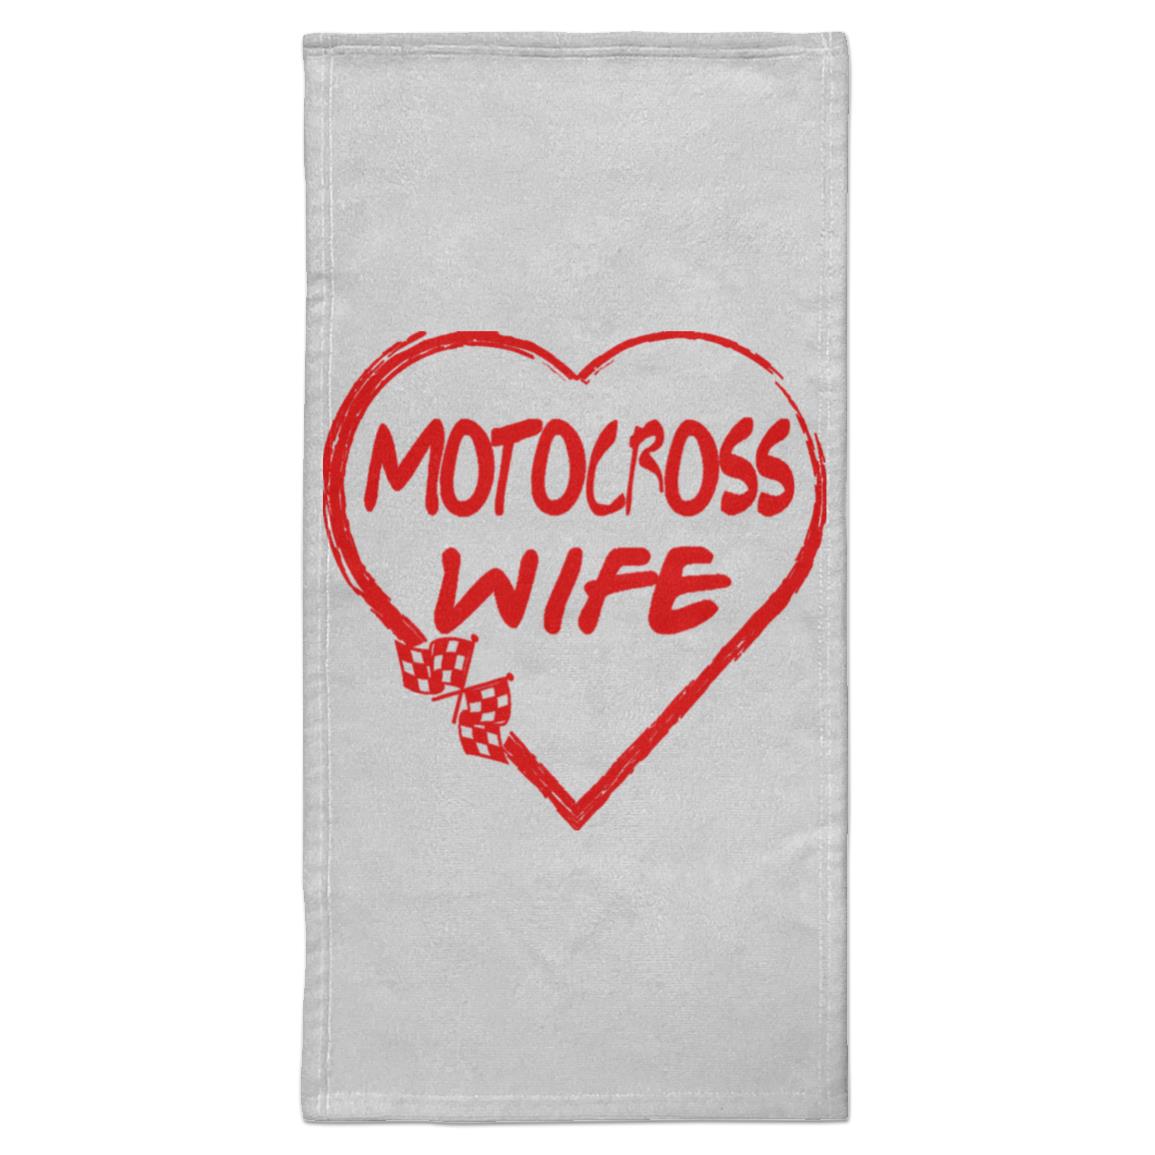 Motocross Wife Towel - 15x30